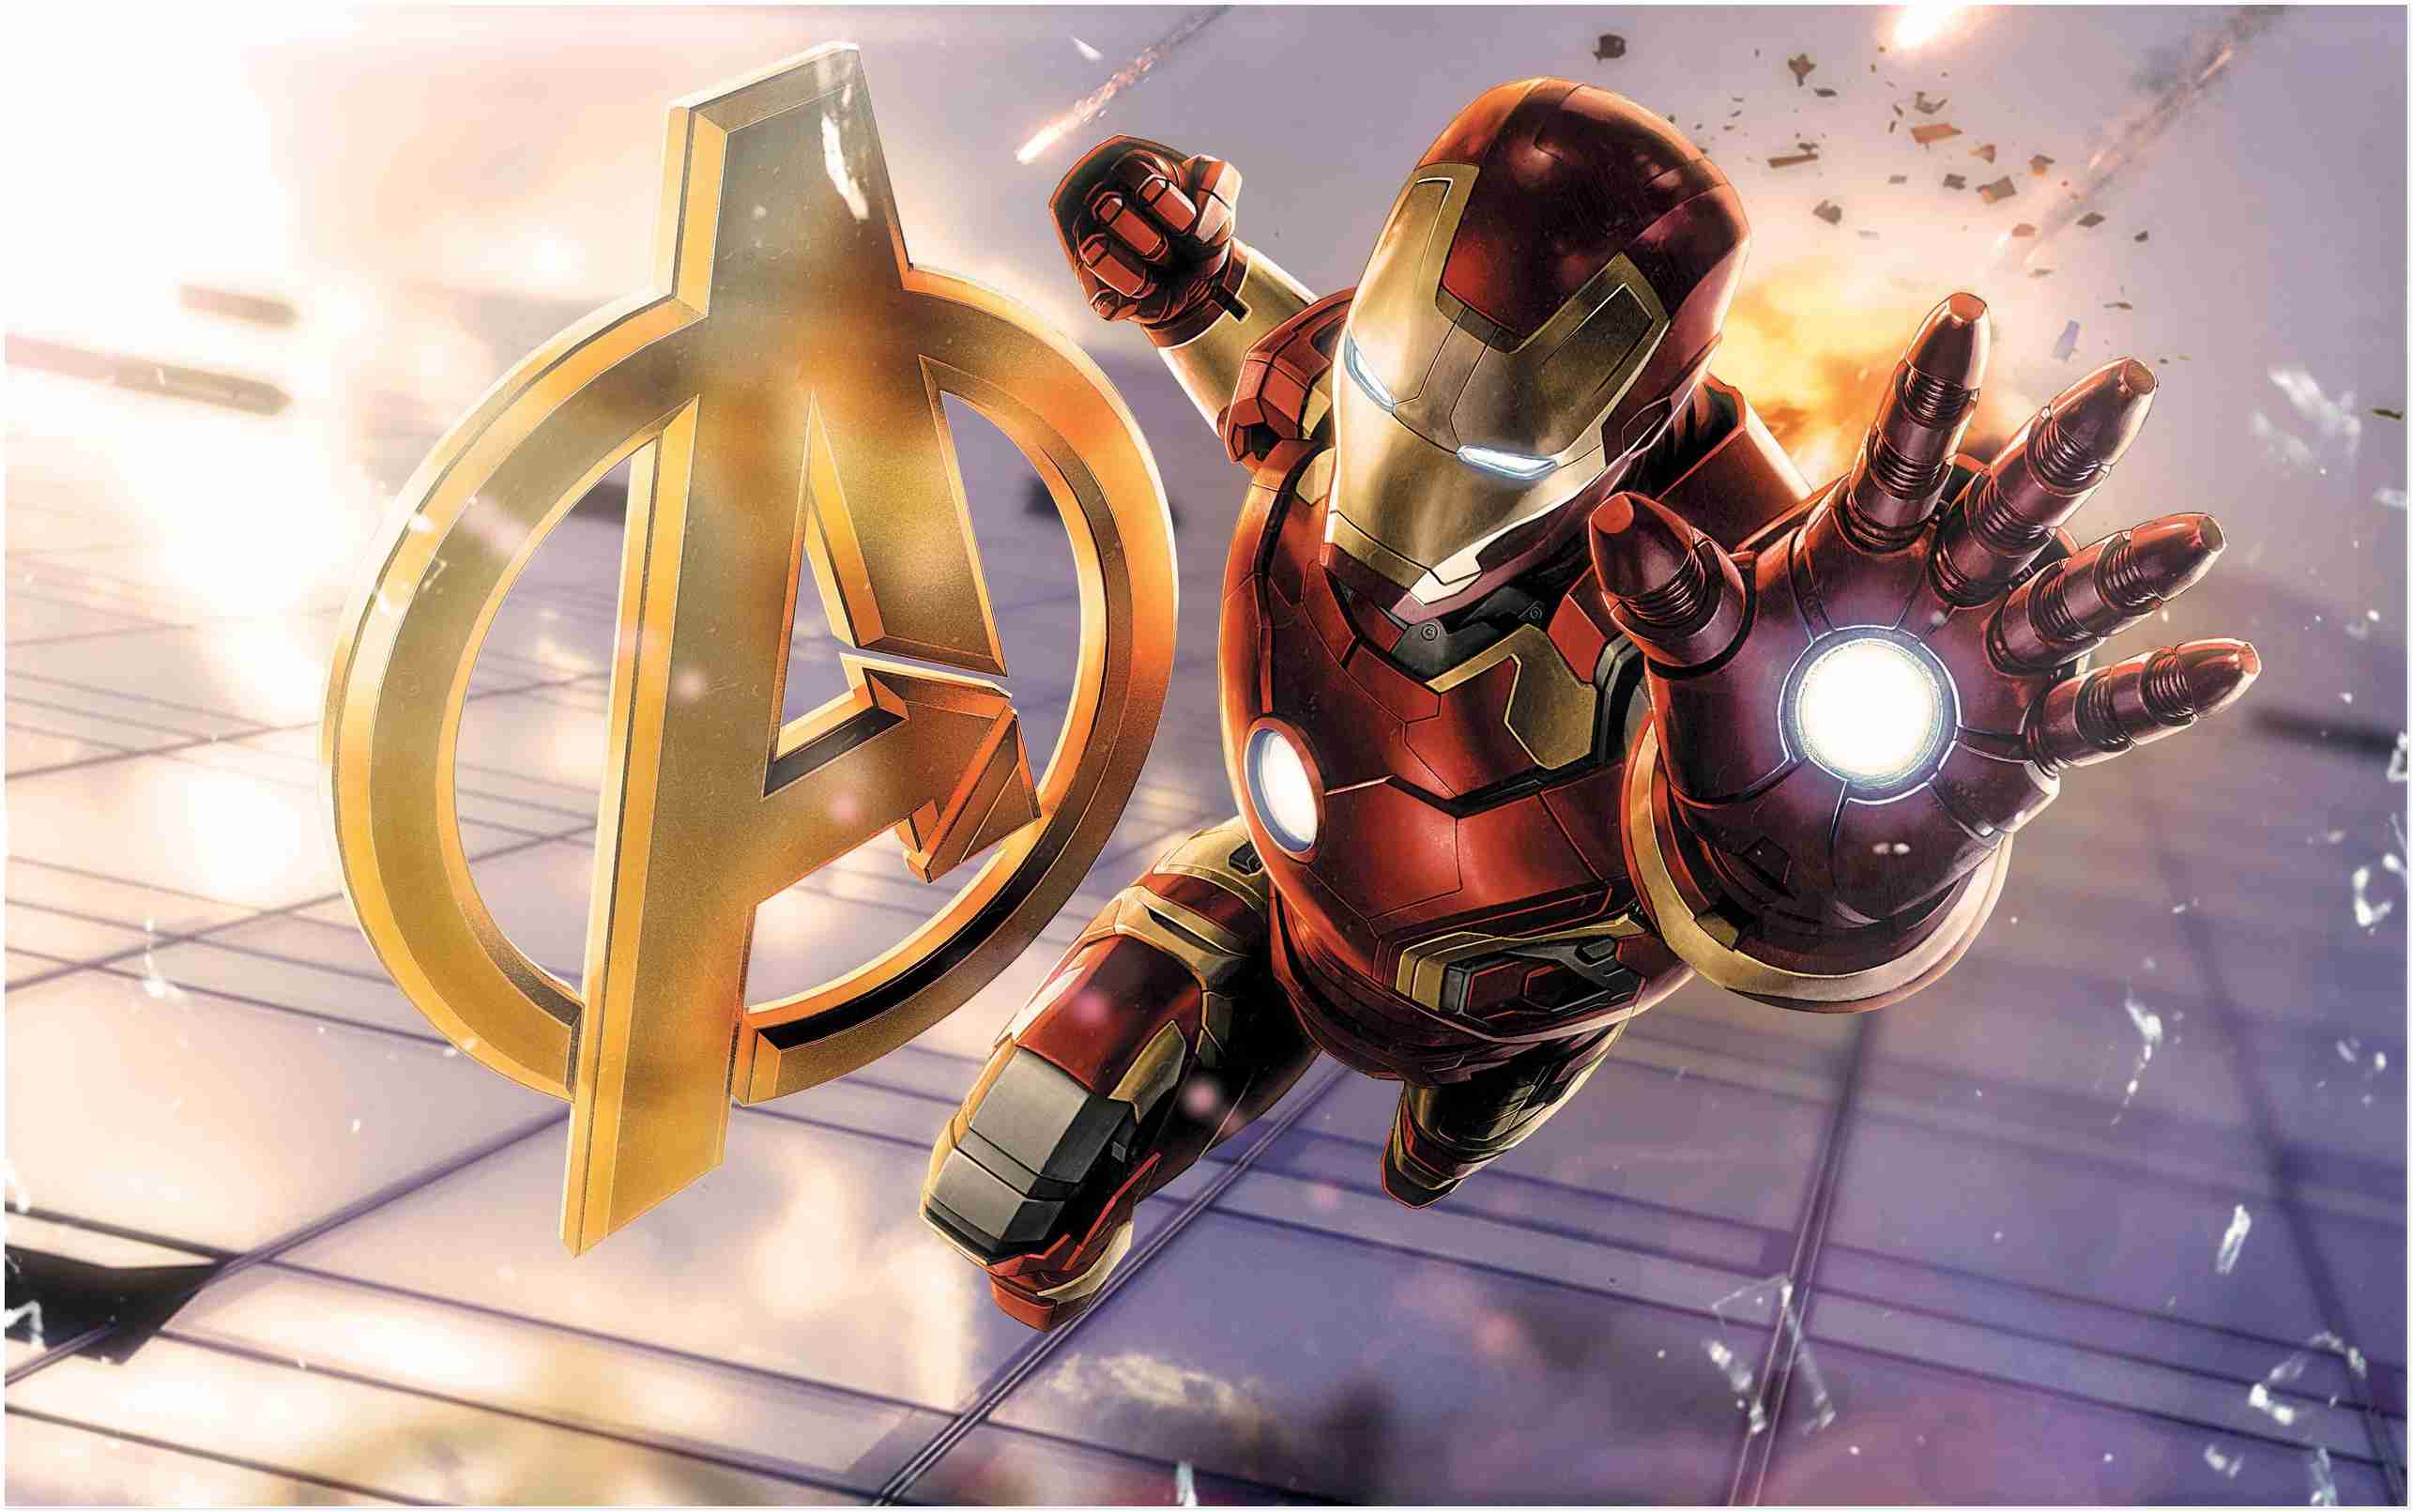 Best Iron Man Wallpaper, Desktop Background For Any - Iron Man Hd Wallpapers  Download - 2571x1611 Wallpaper 